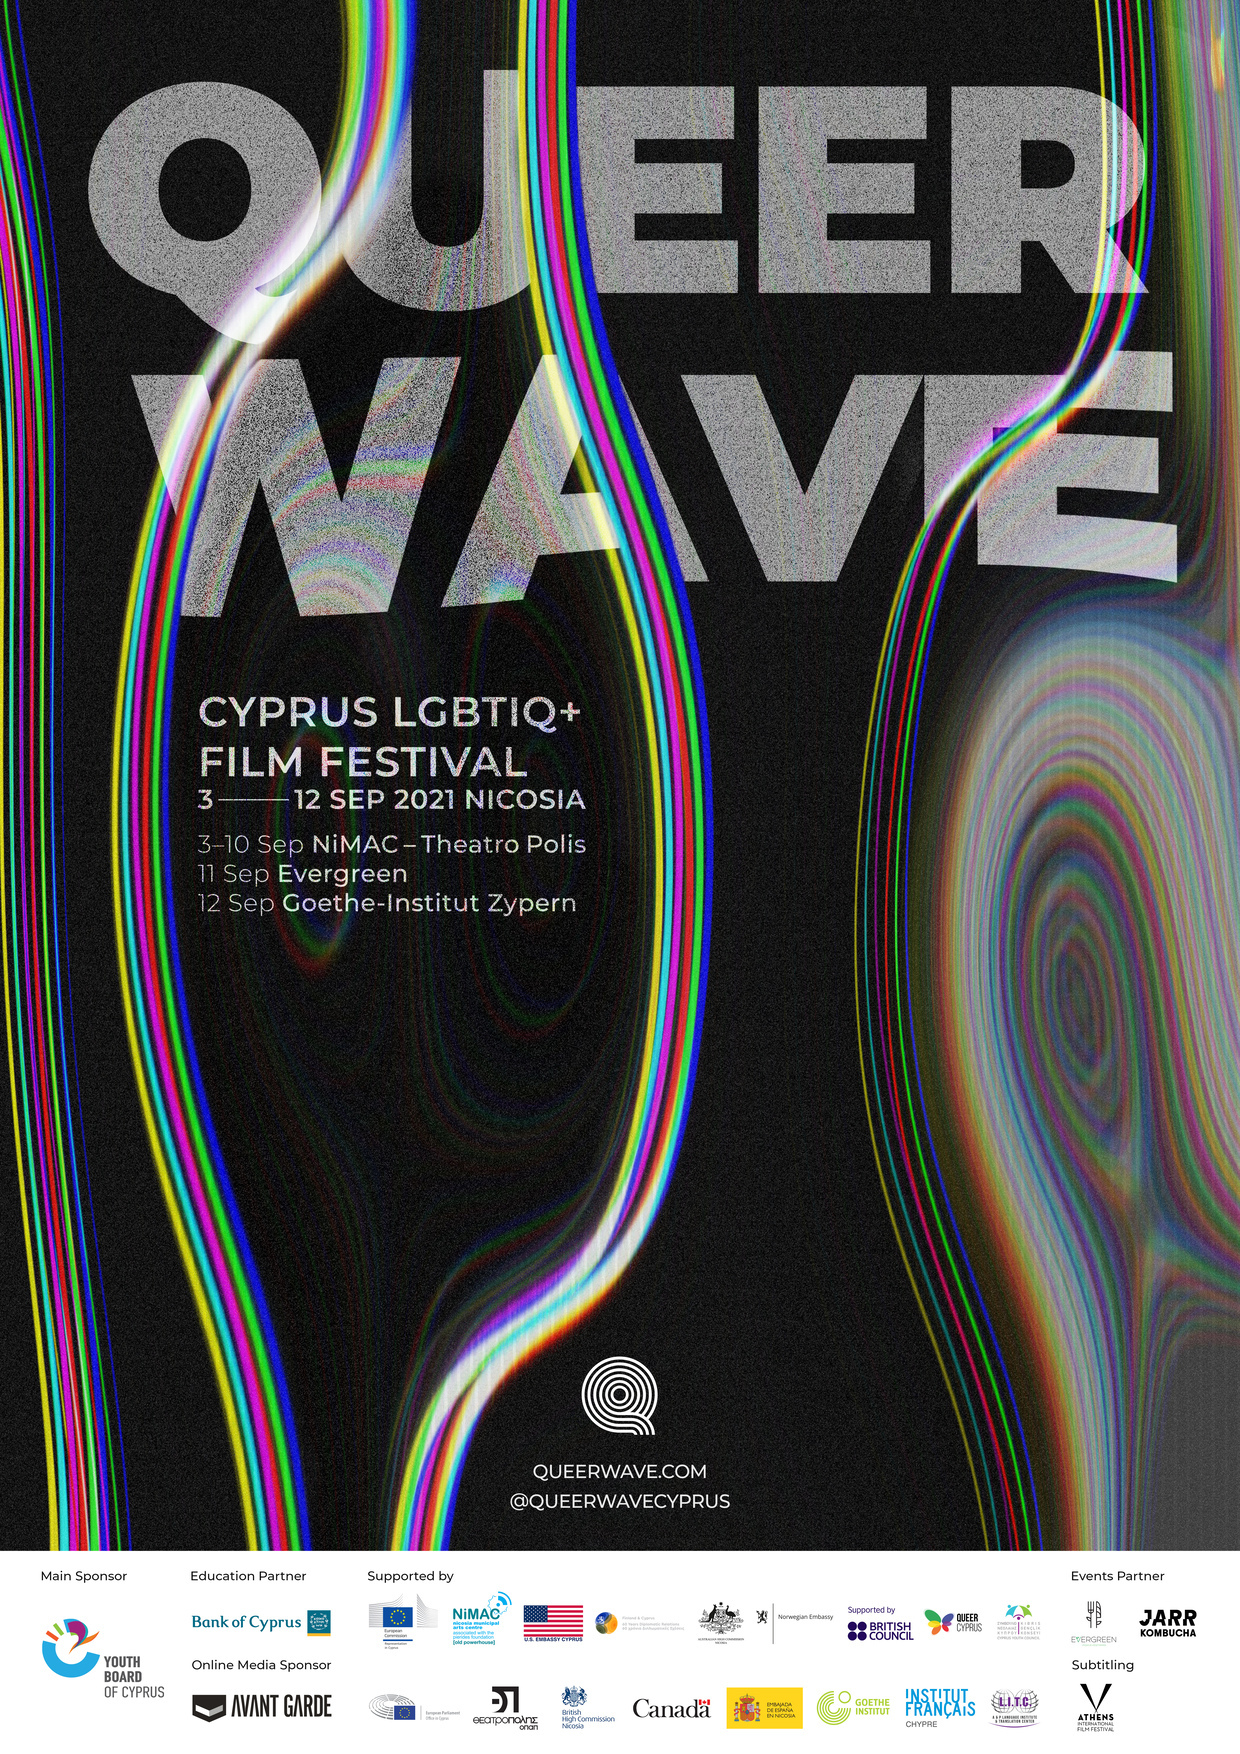 queer-wave-3-eylul-de-basliyor-1